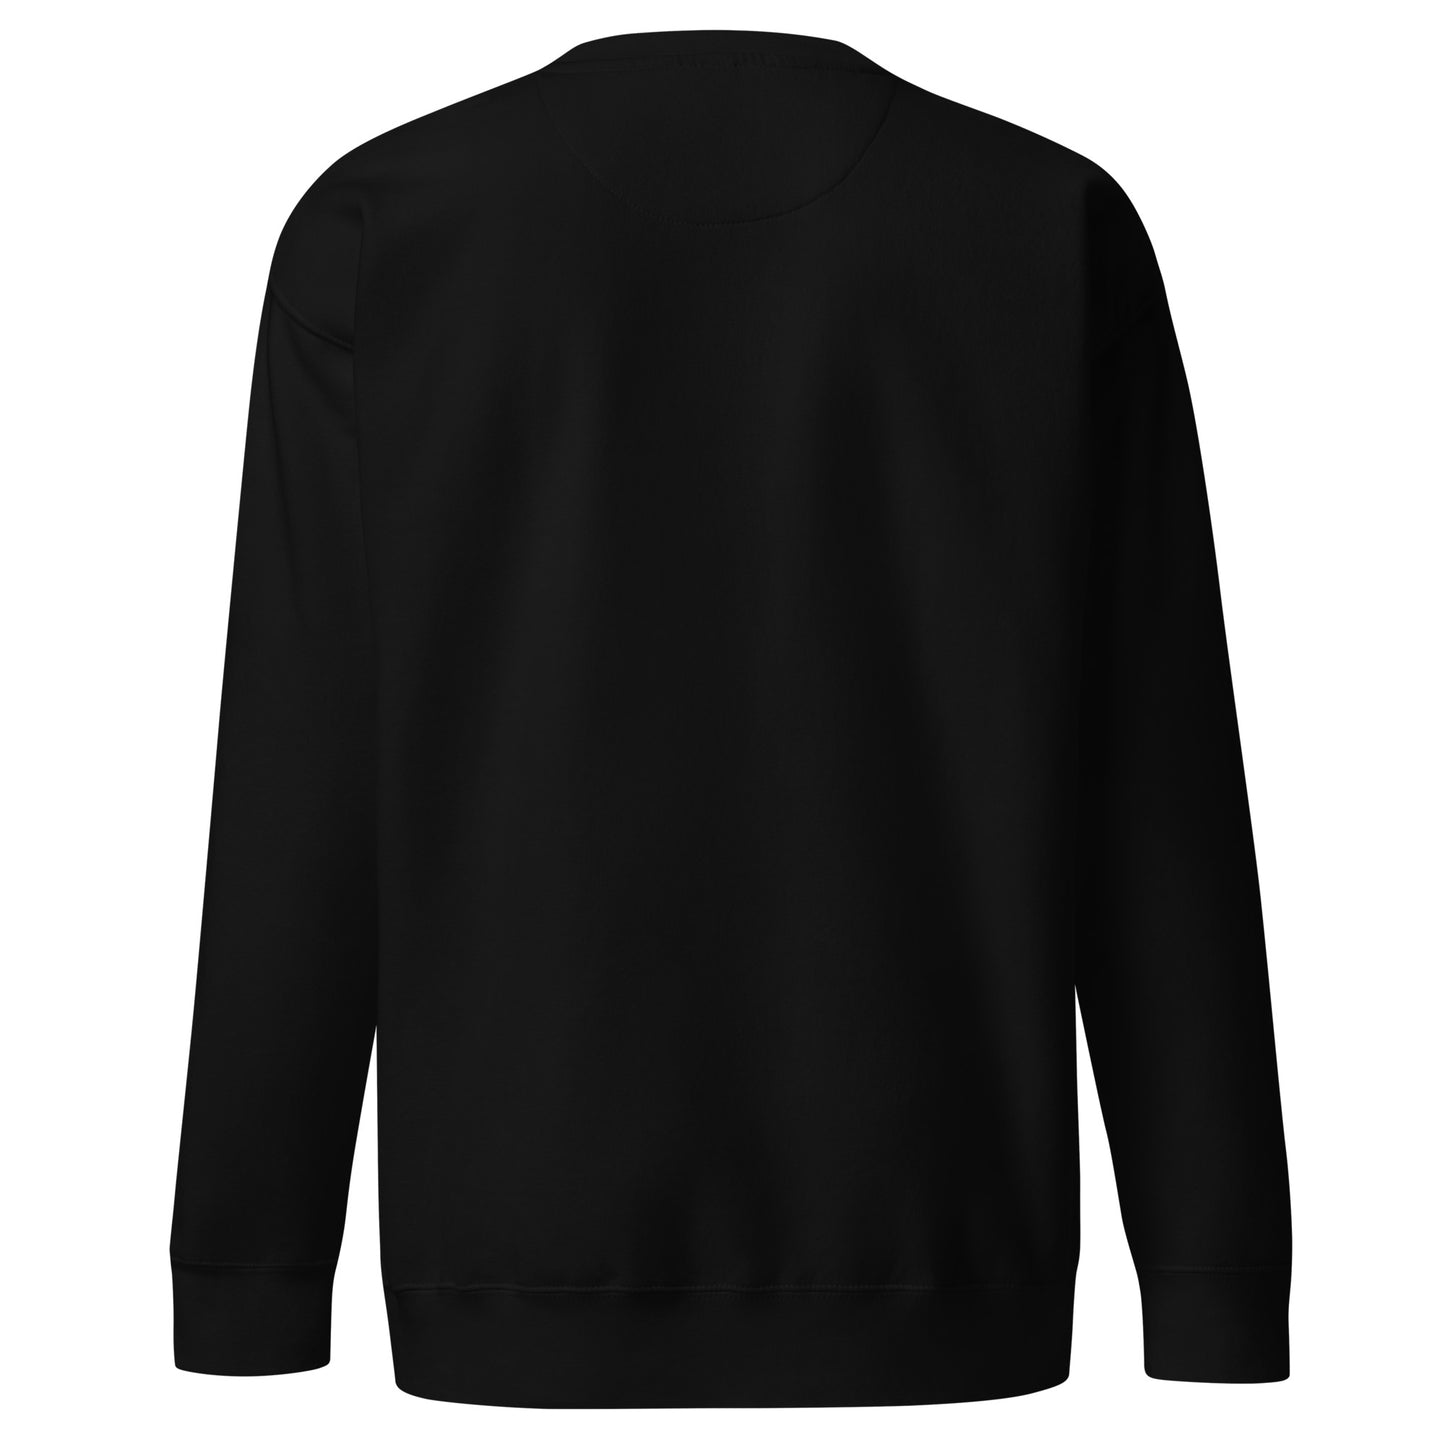 back sweatshirt Weirdo black by B.Different Clothing independent streetwear brand inspired by street art graffiti